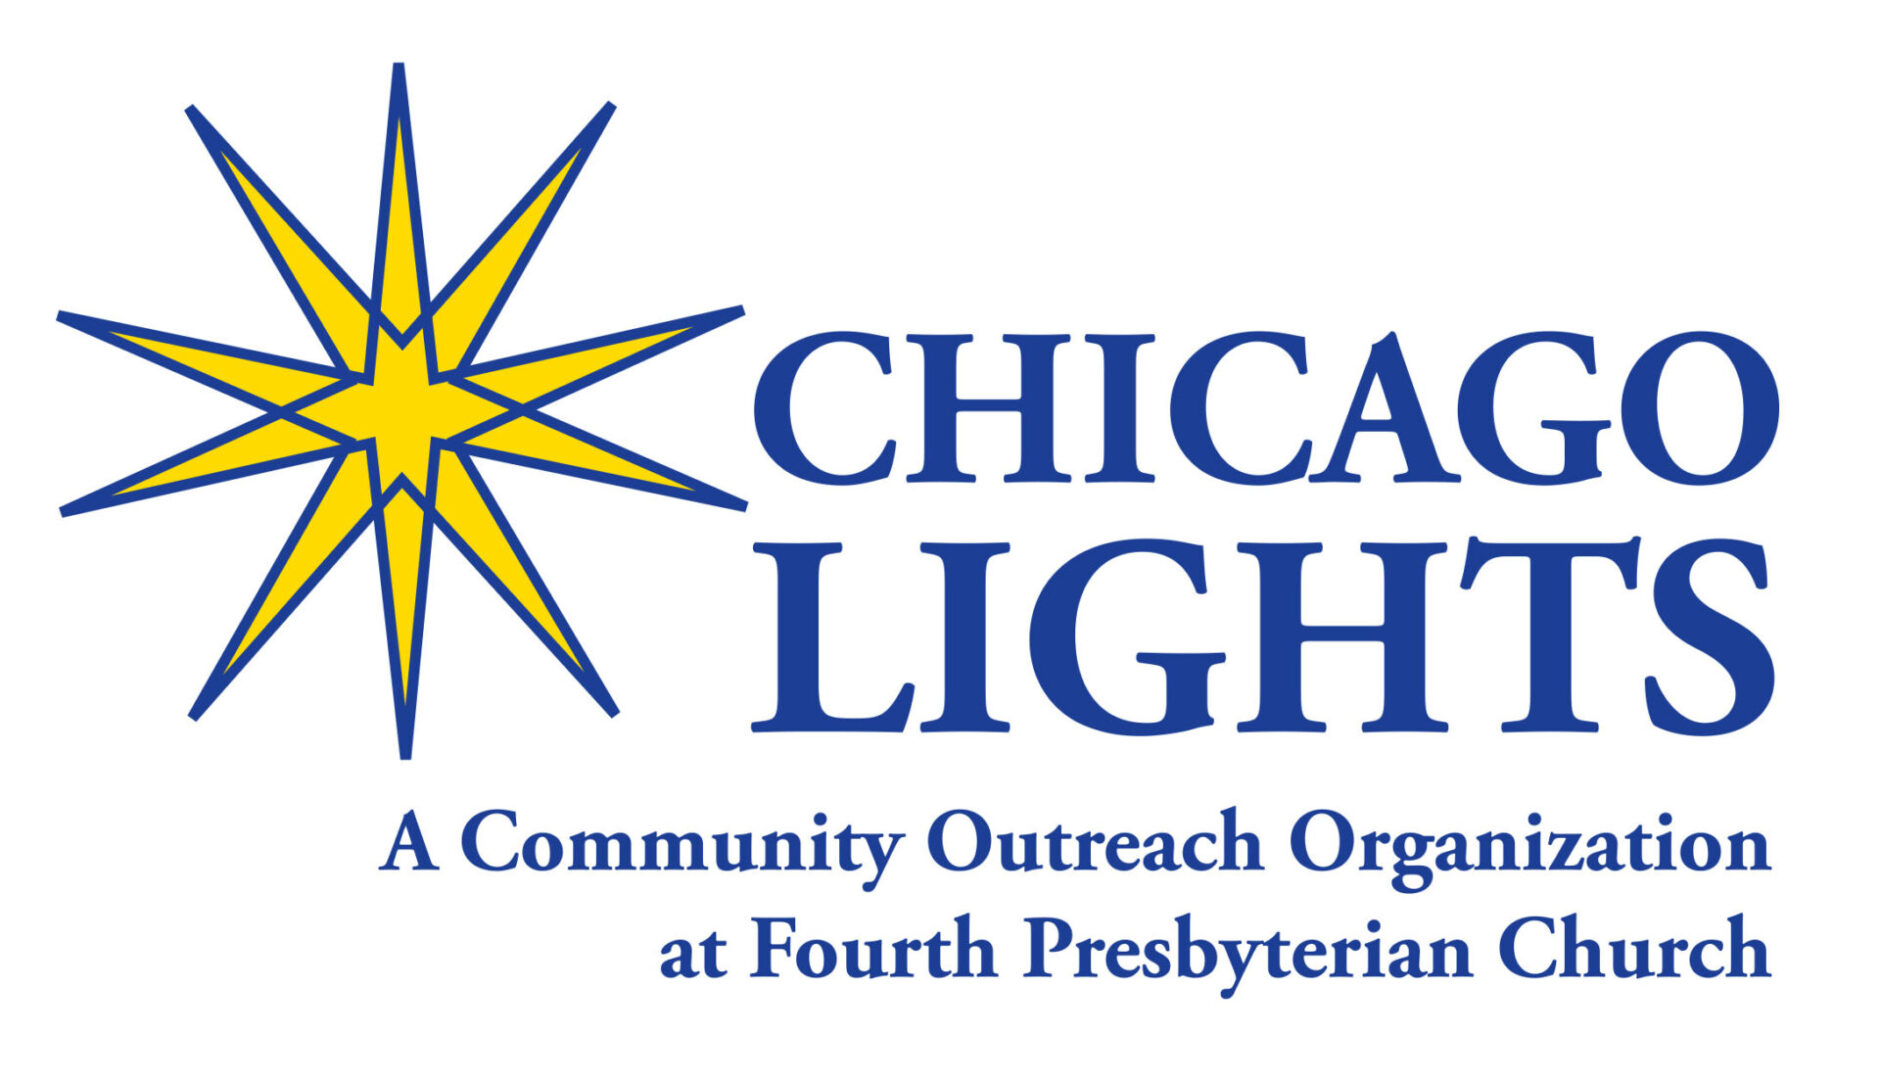 Chicago lights logo